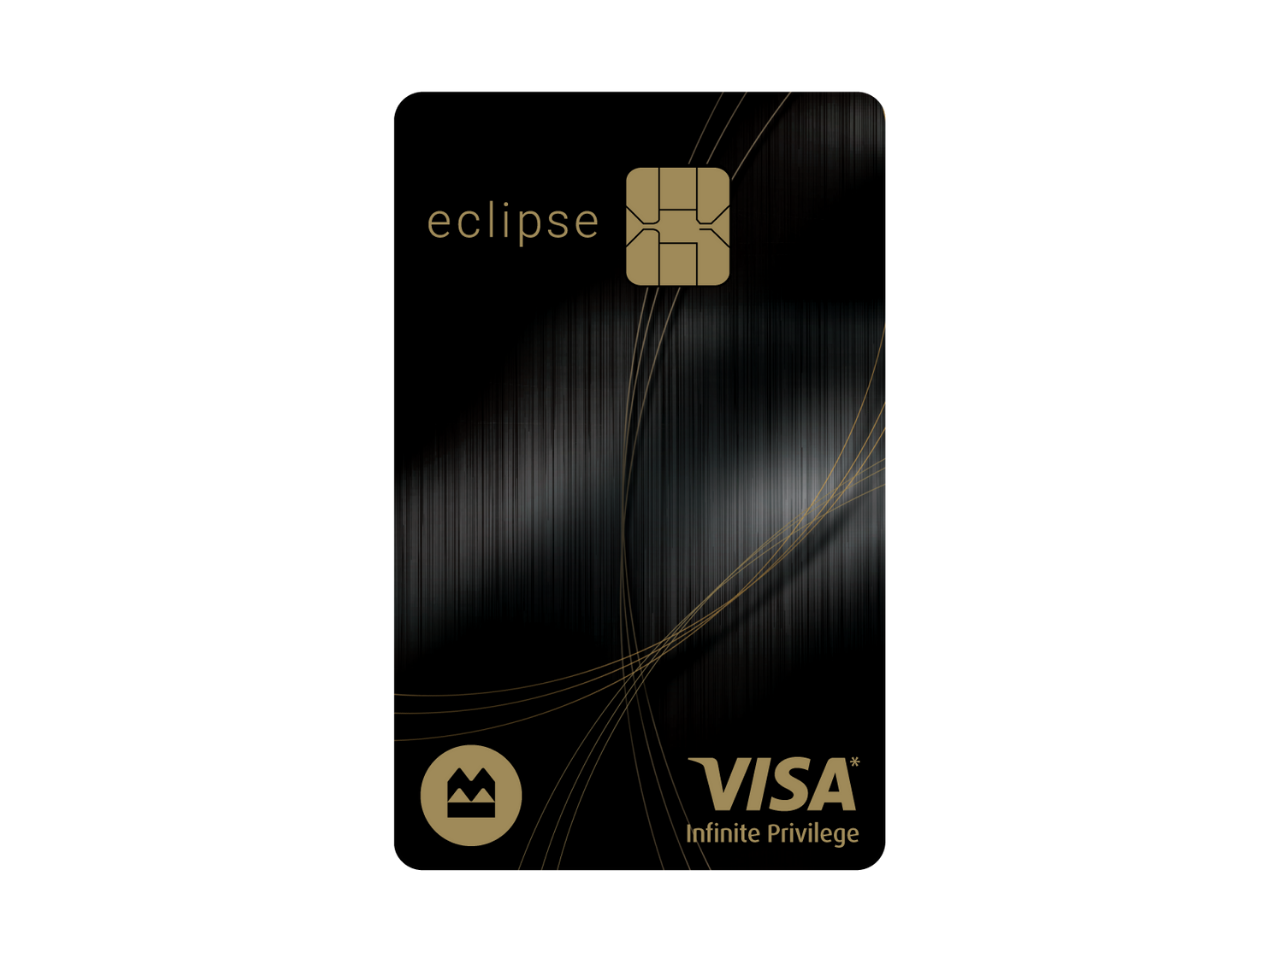 BMO eclipse Visa Infinite Privilege* Card Review